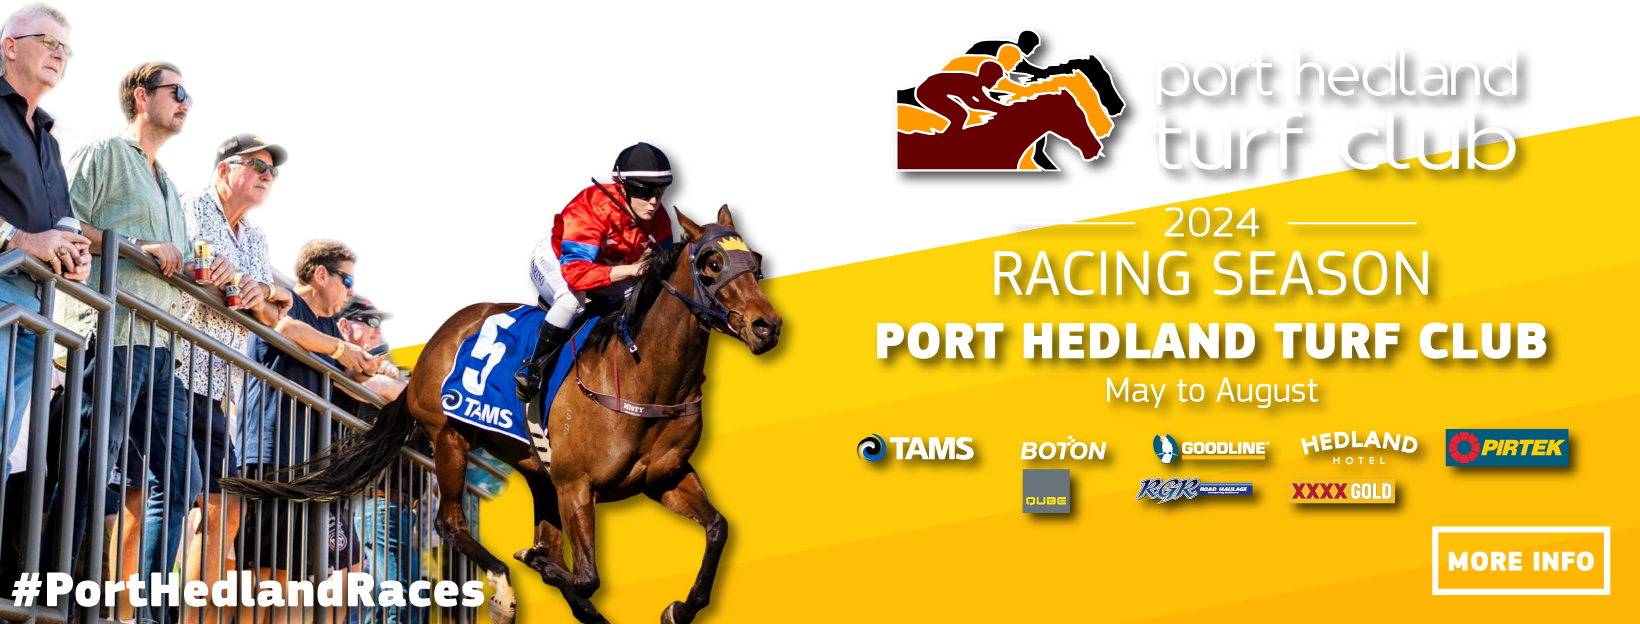 2024 Port Hedland Races Race Dates #PortHedlandRaces at Port Hedland Turf Club